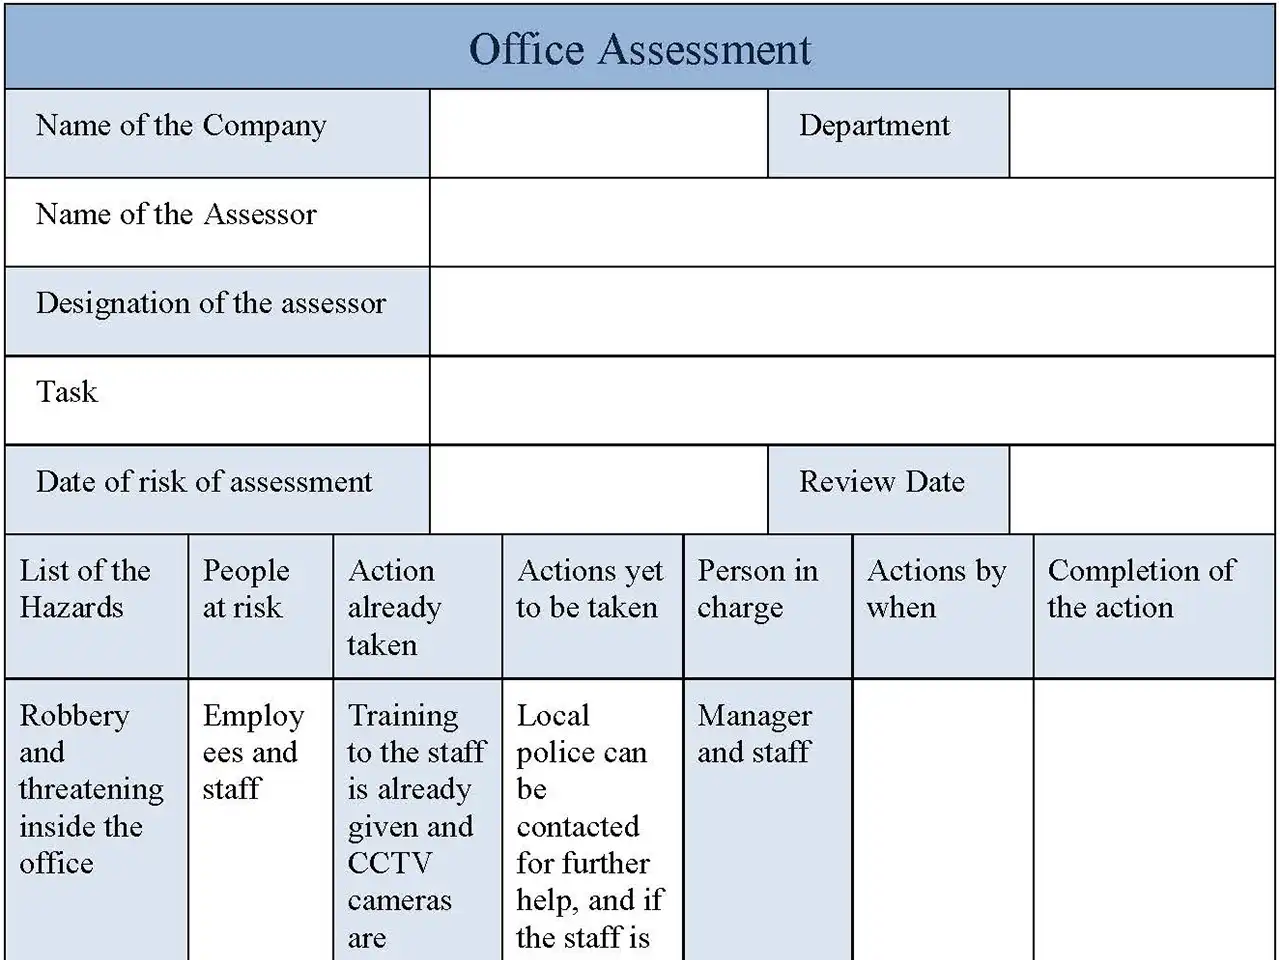 Office Assessment Template